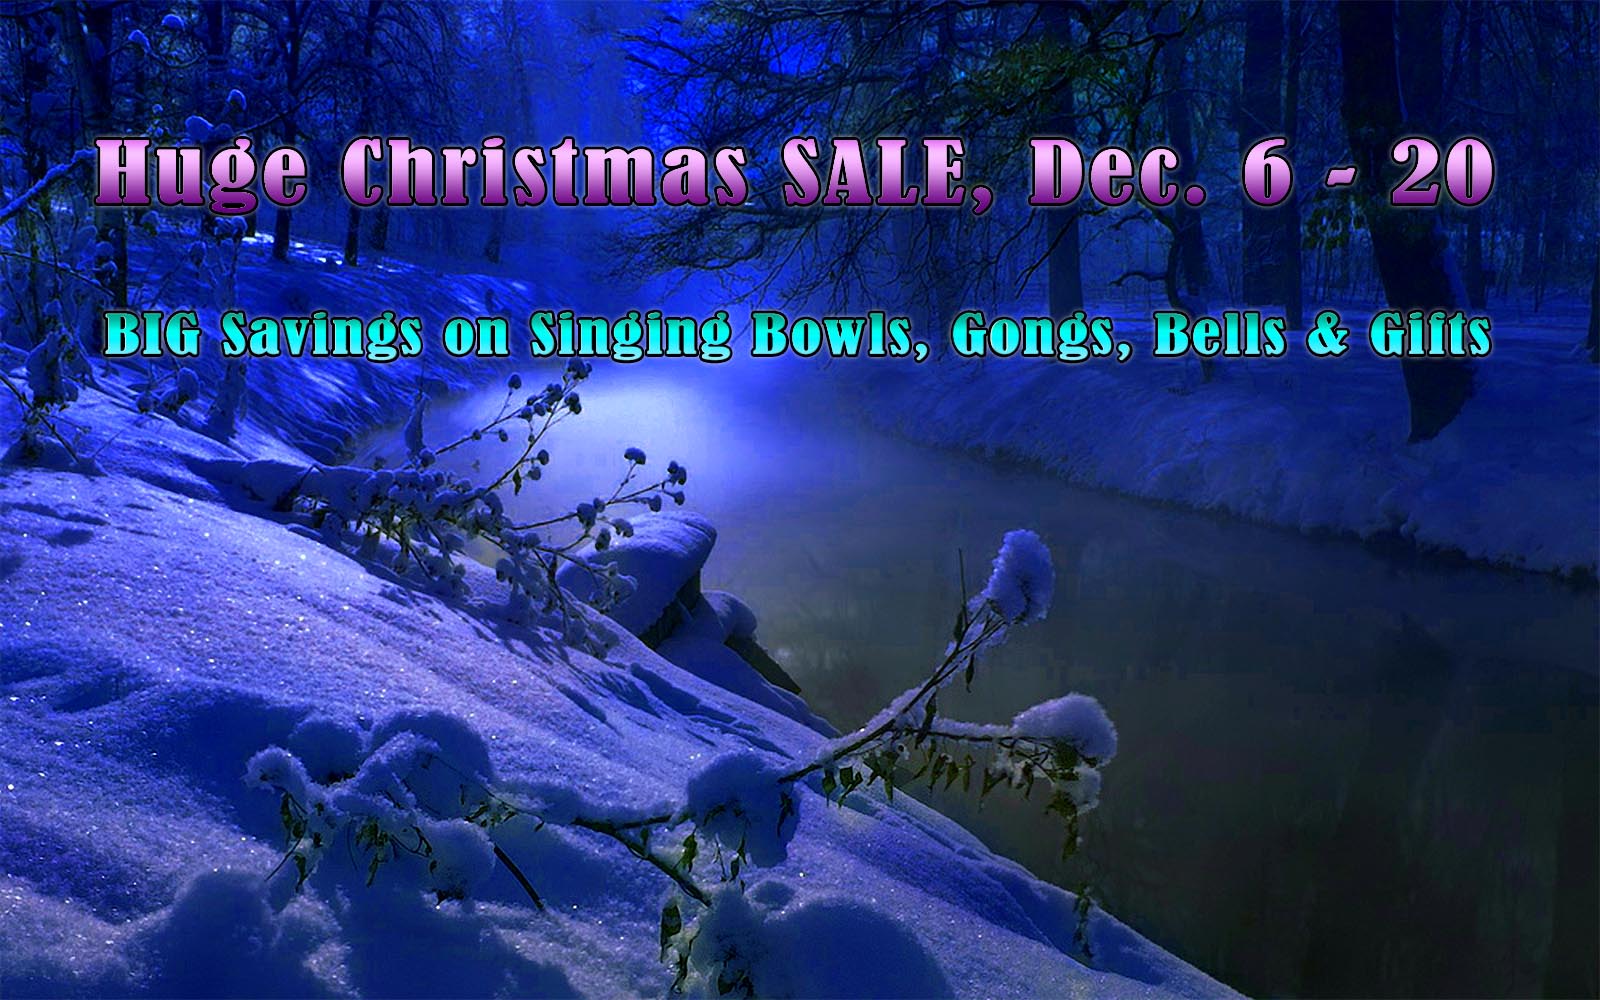 HUGE Christmas SALE, Dec. 6 - 20 at Heaven of Sound: BIG Savings on Singing Bowls, Gongs, Bells, Gifts